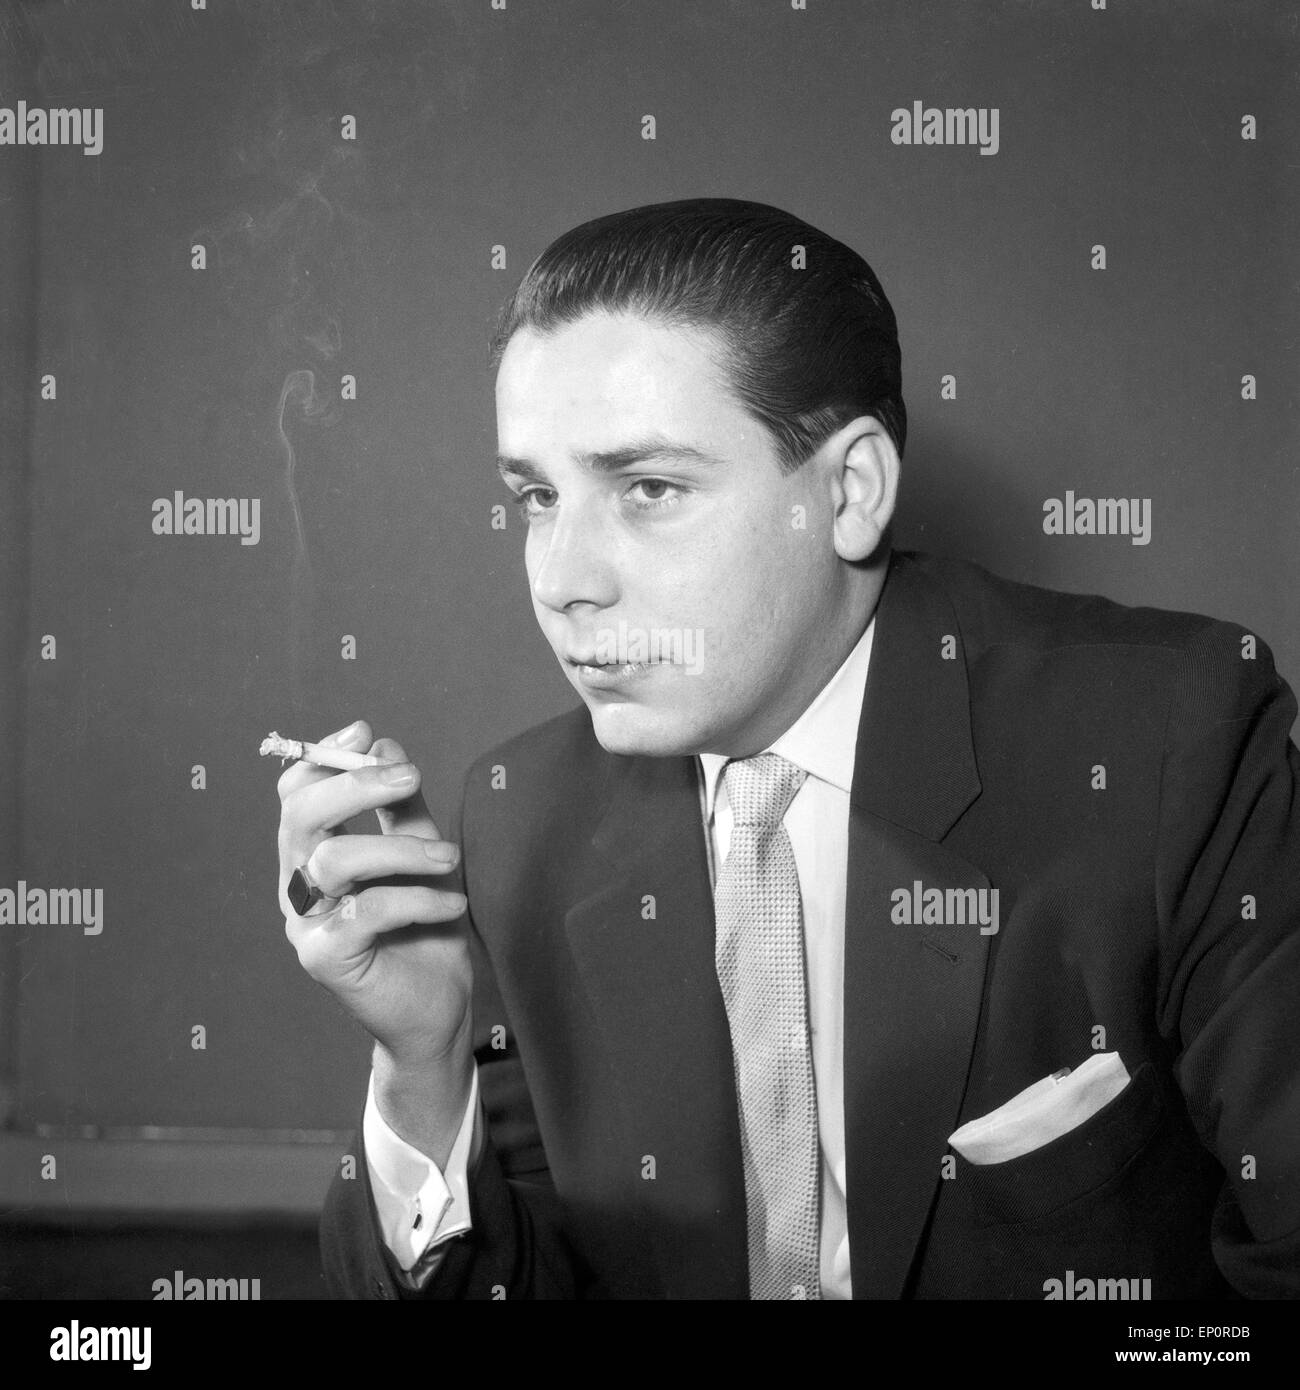 Porträt eines jungen Mannes, eine Zigarette, rauchend Deutschland 1955. Portrait de jeune homme, fumer la cigarette, Allemagne 1955 Banque D'Images